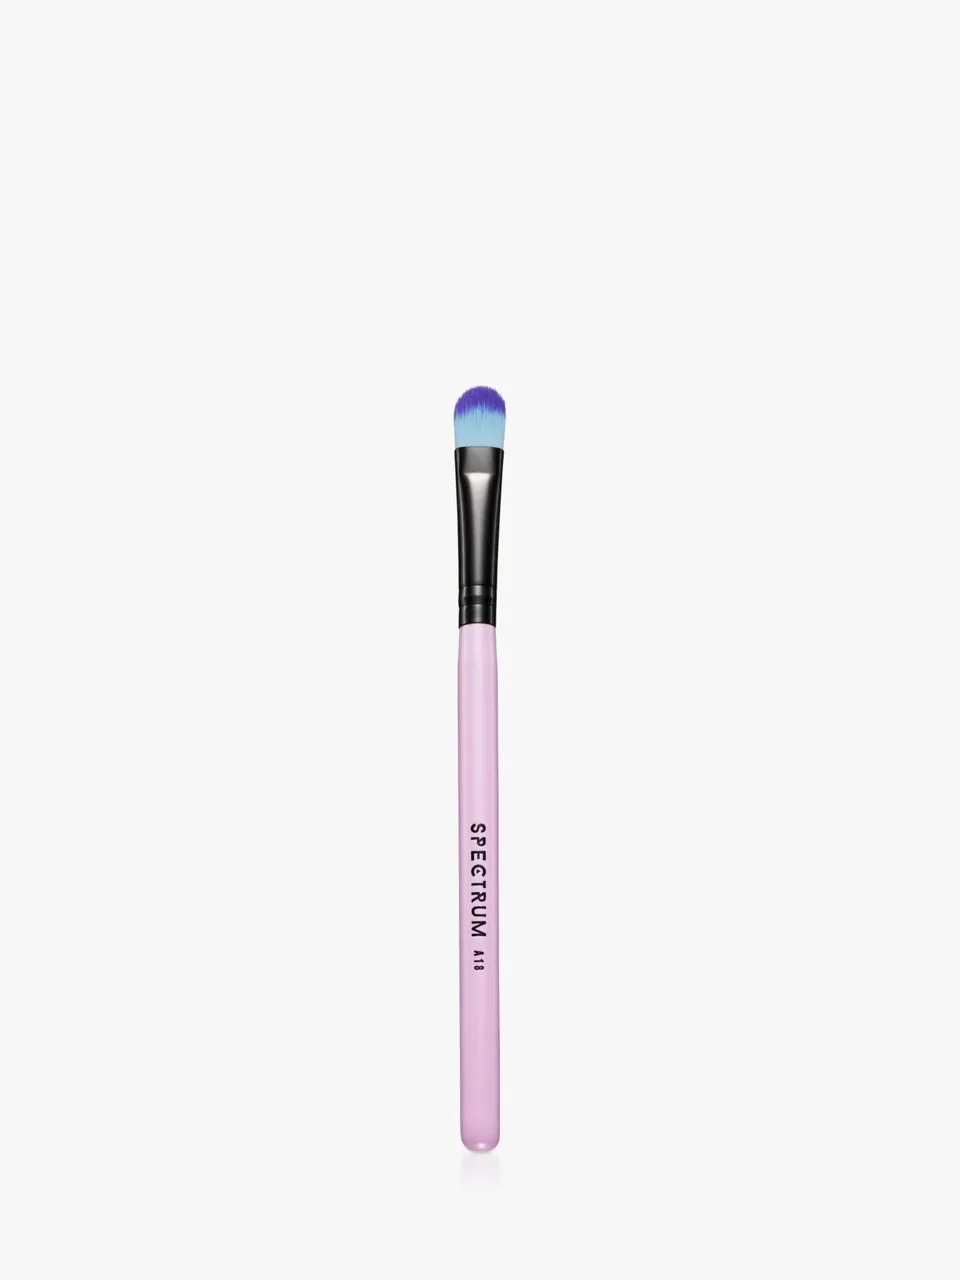 Spectrum Oval Concealer Makeup Brush - Unisex